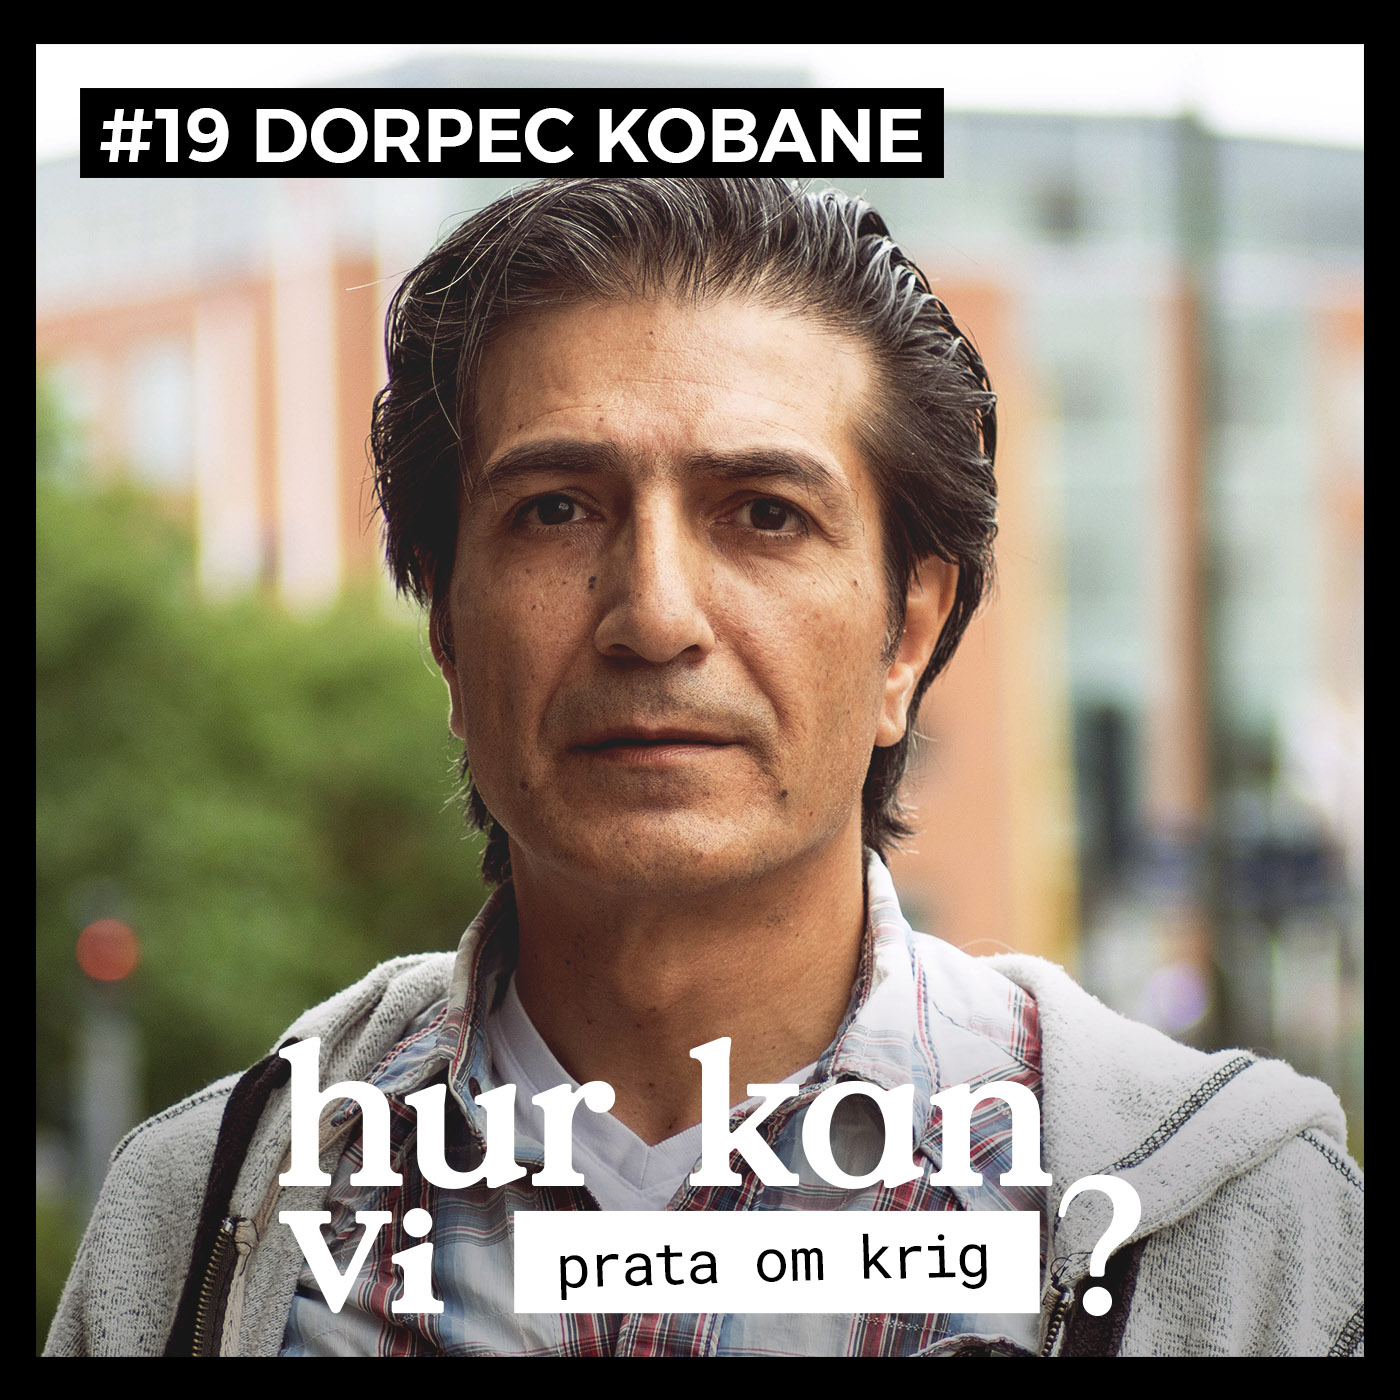 #19 Dorpec Kobane